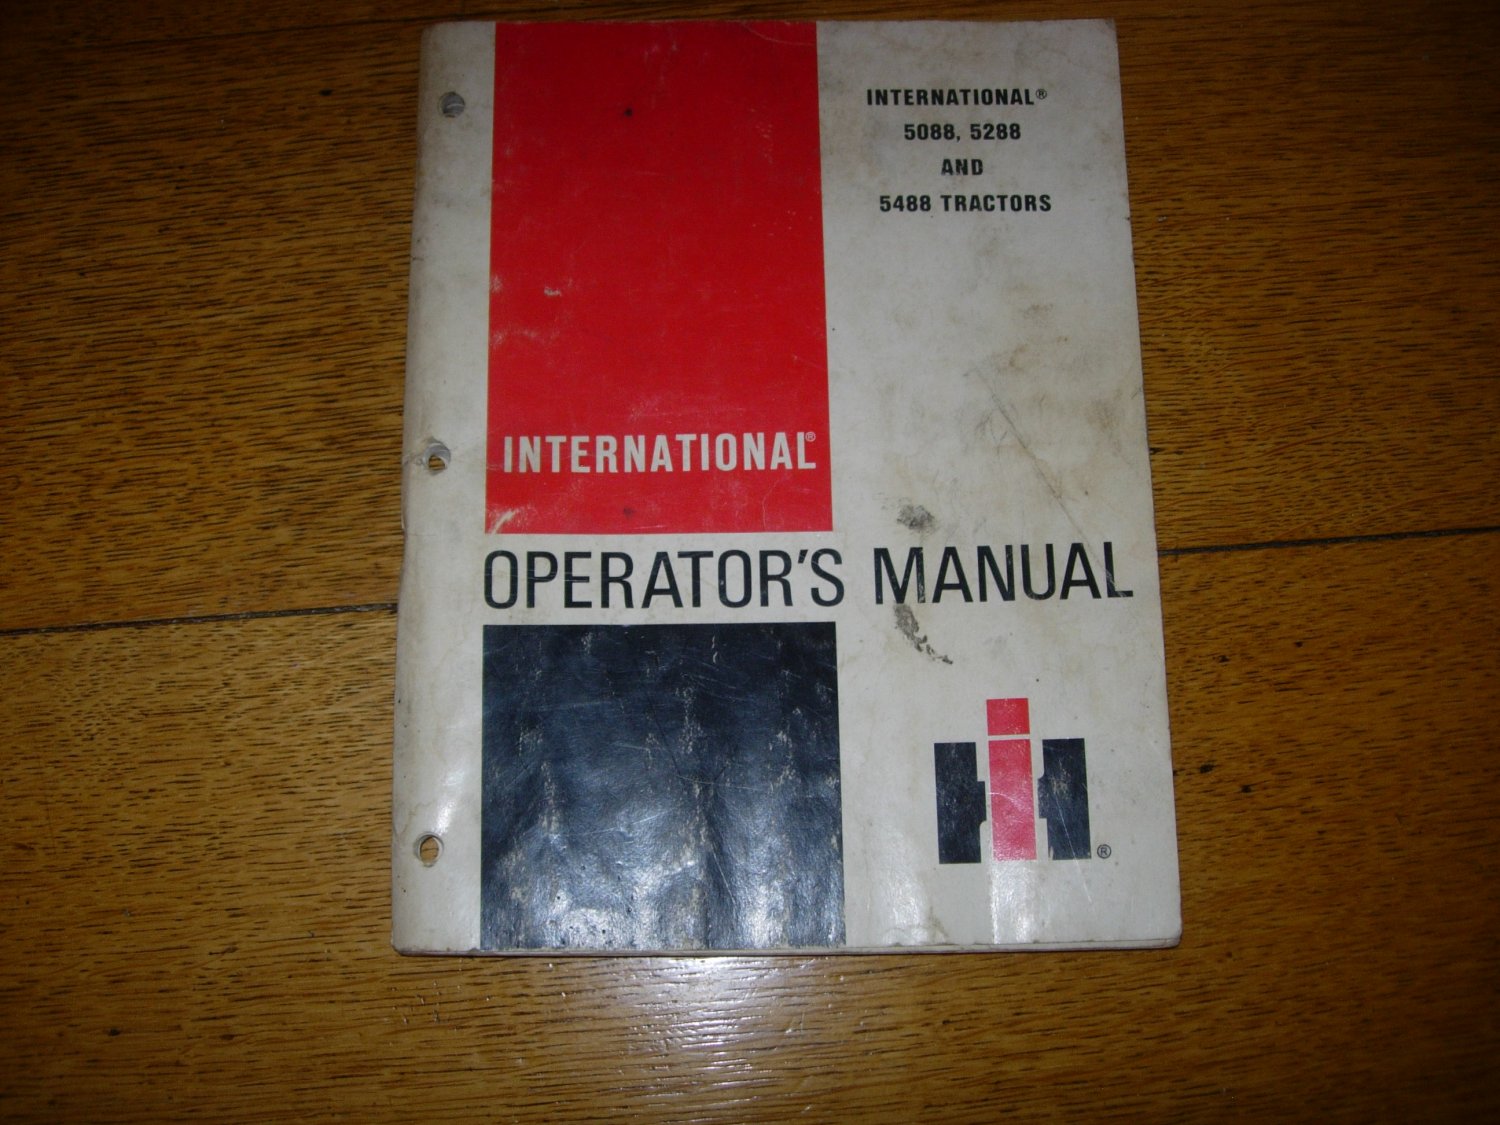 International Harvester 5088, 5288, and 5488 Operators Manual